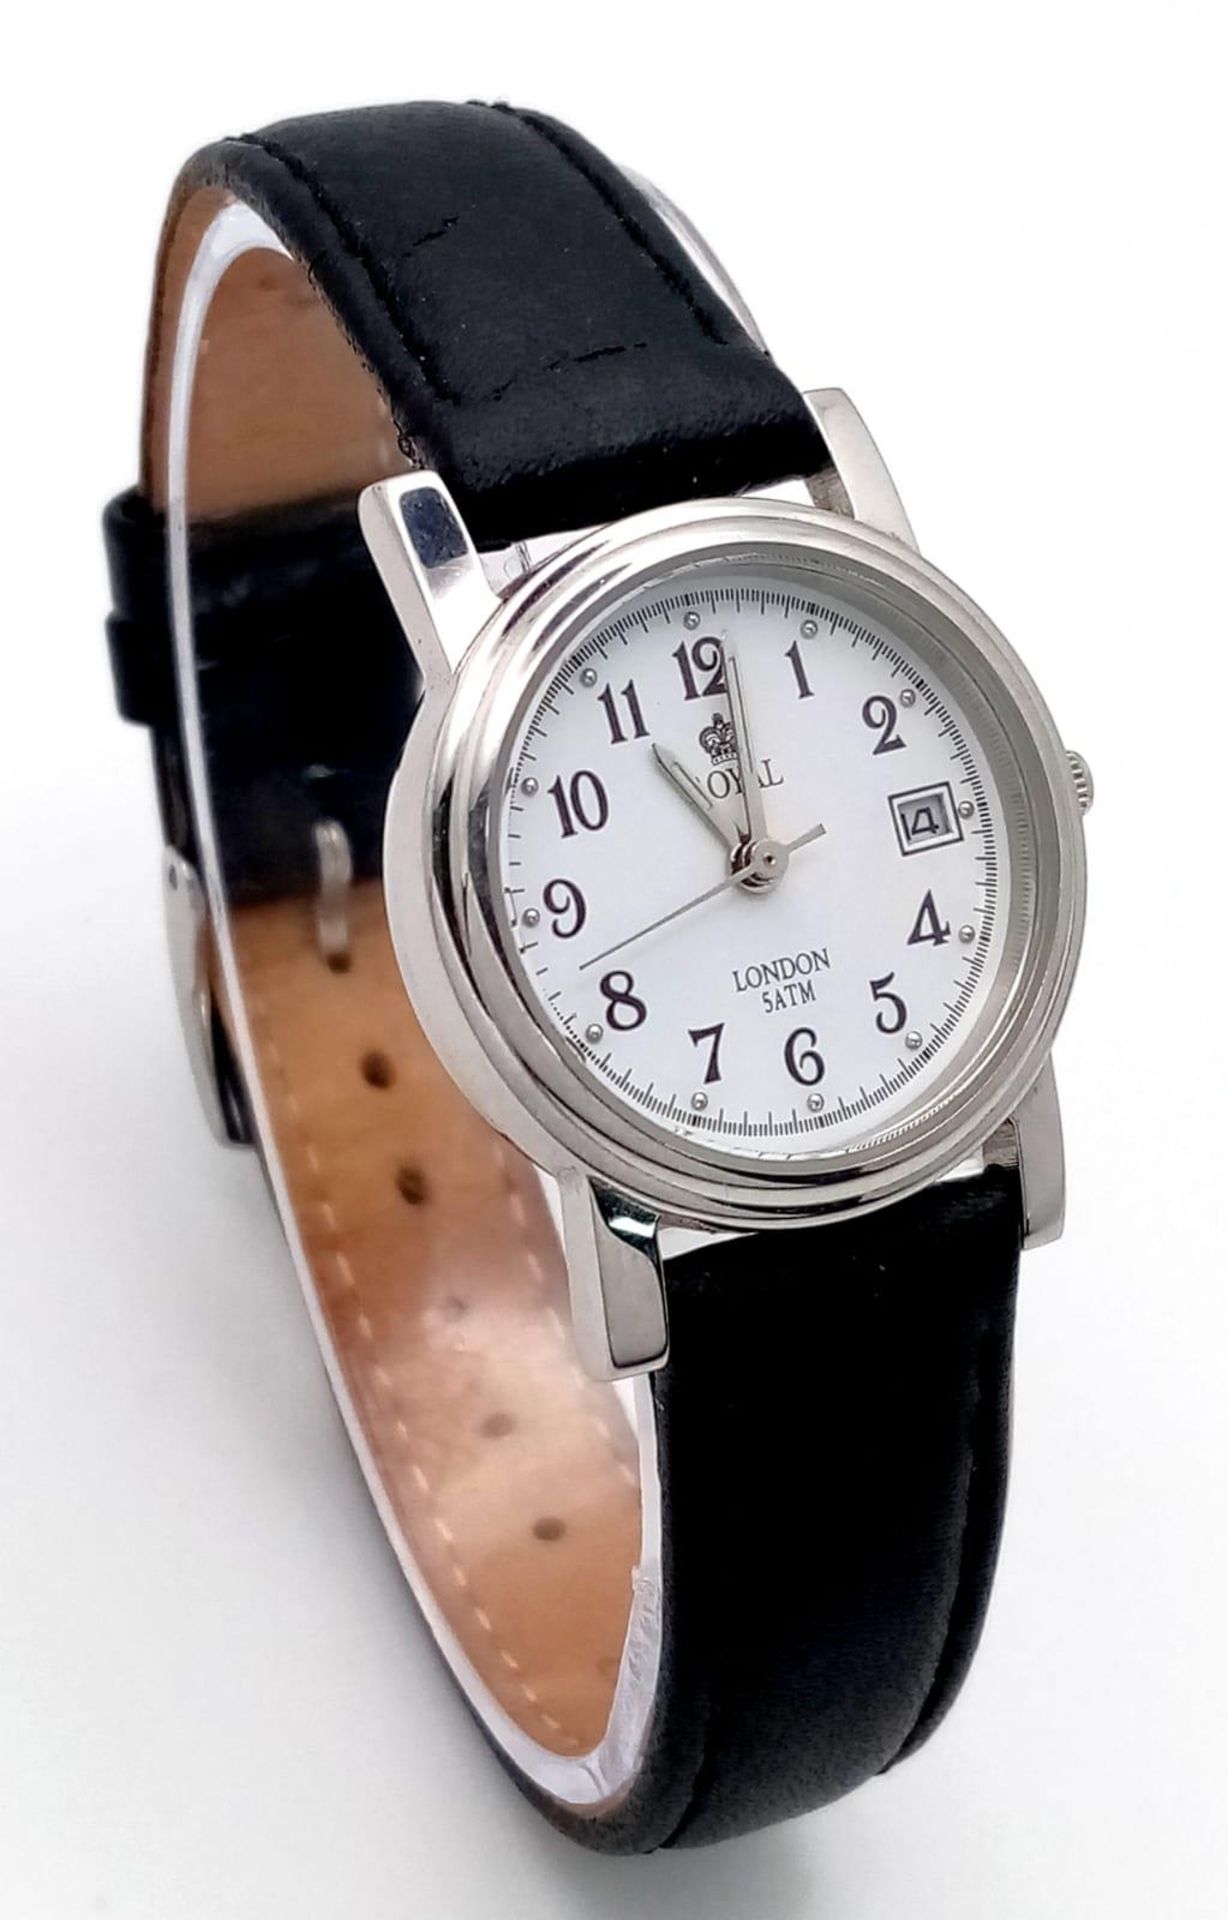 A Ladies Royal London Quartz Watch. Black leather strap. Stainless steel case - 25mm. White dial - Bild 3 aus 7